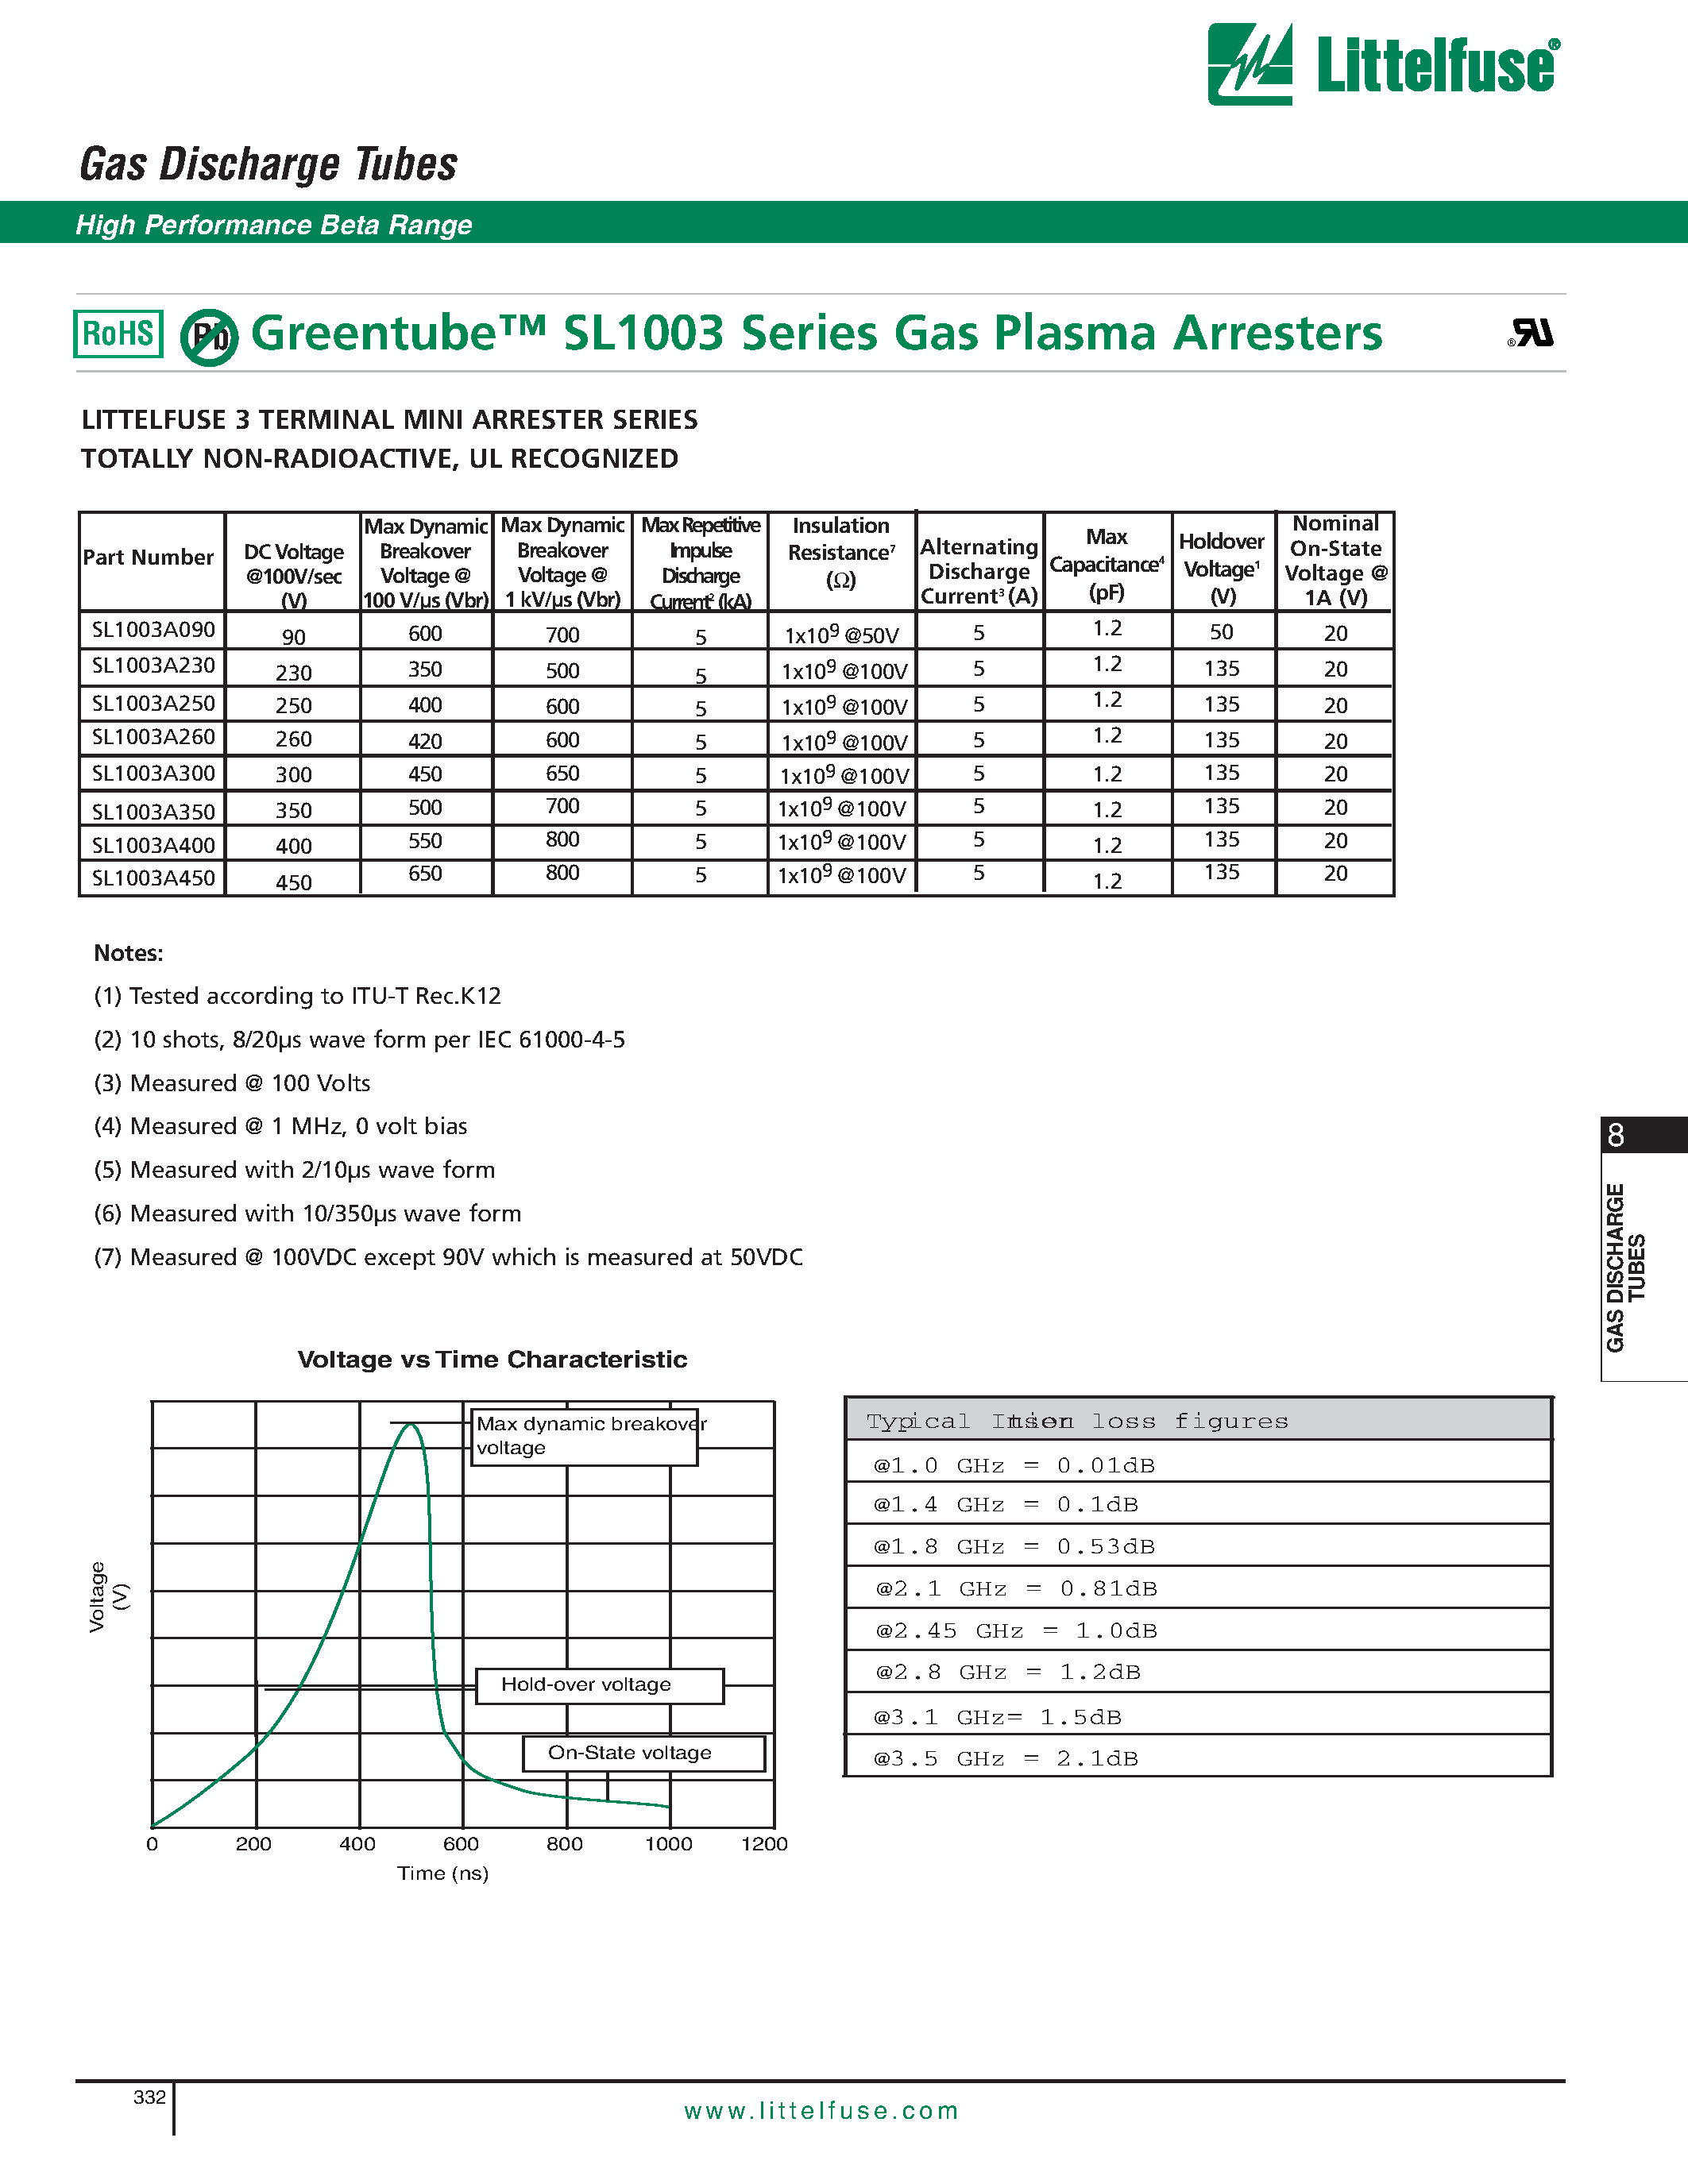 Даташит SL1003A400 - Greentube SL1003 Series Gas Plasma Arresters страница 2